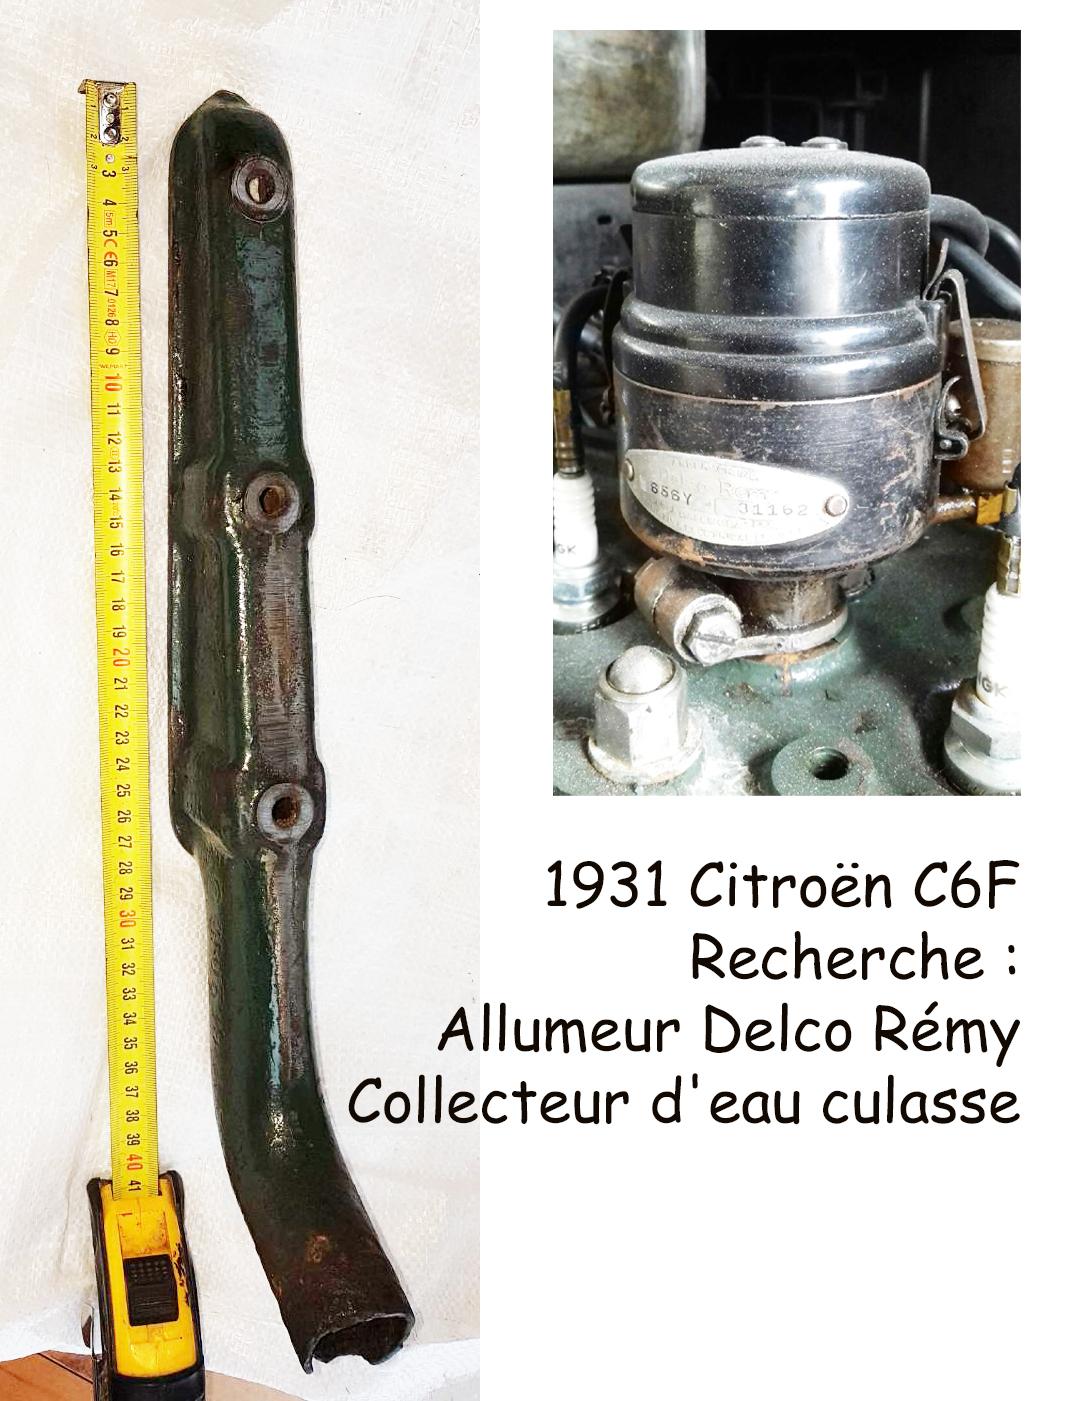 1931 Citroen C6F recherche pièces